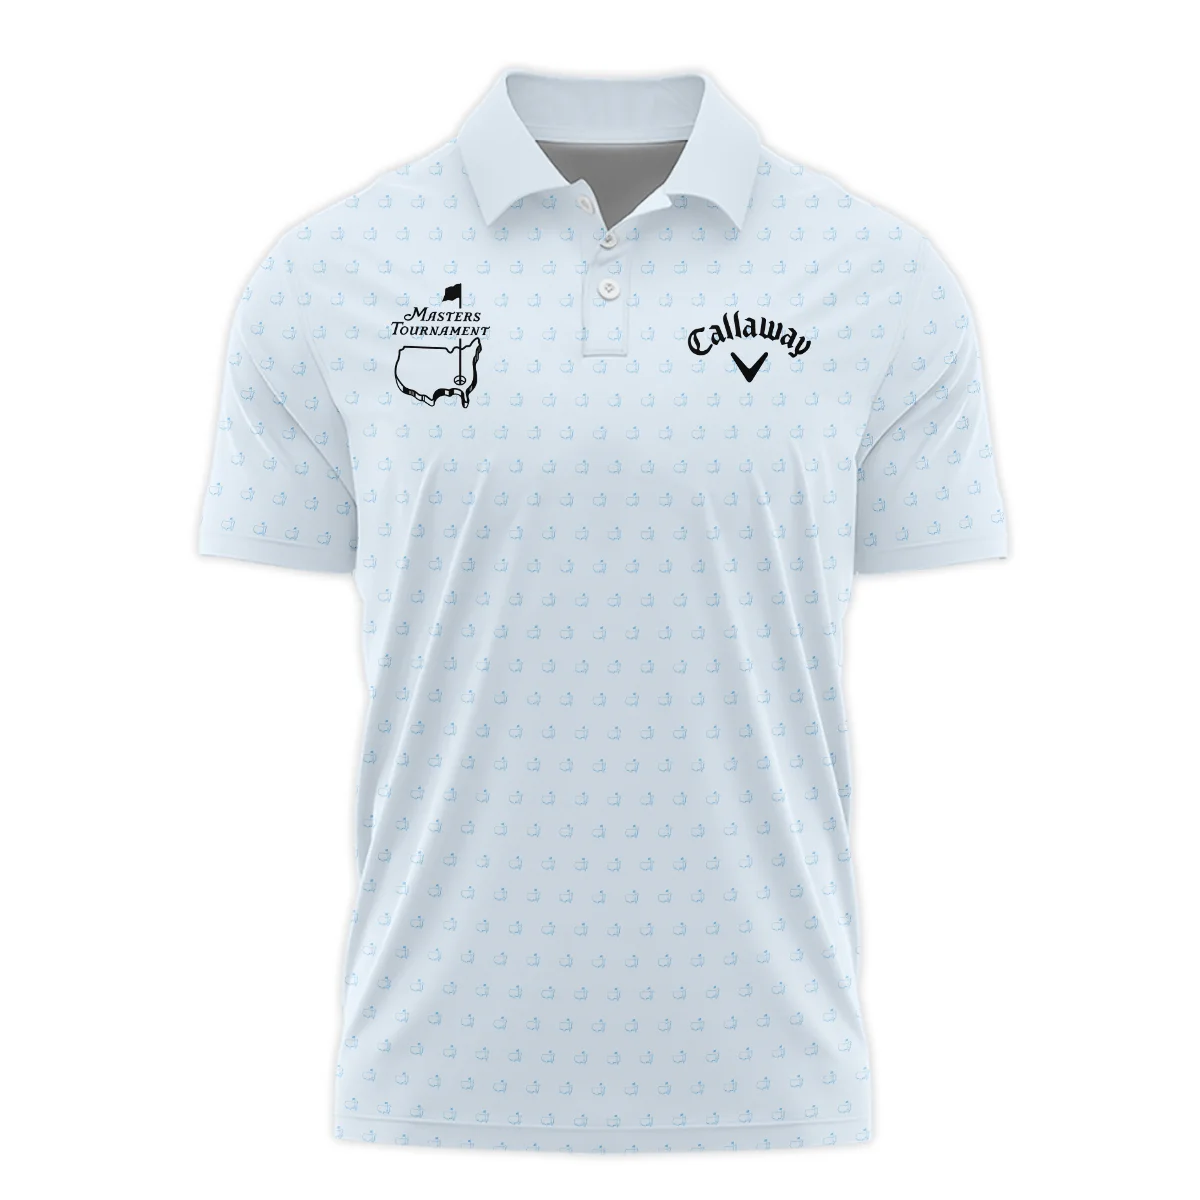 Pattern Masters Tournament Callaway Hoodie Shirt White Light Blue Color Pattern Logo  Hoodie Shirt